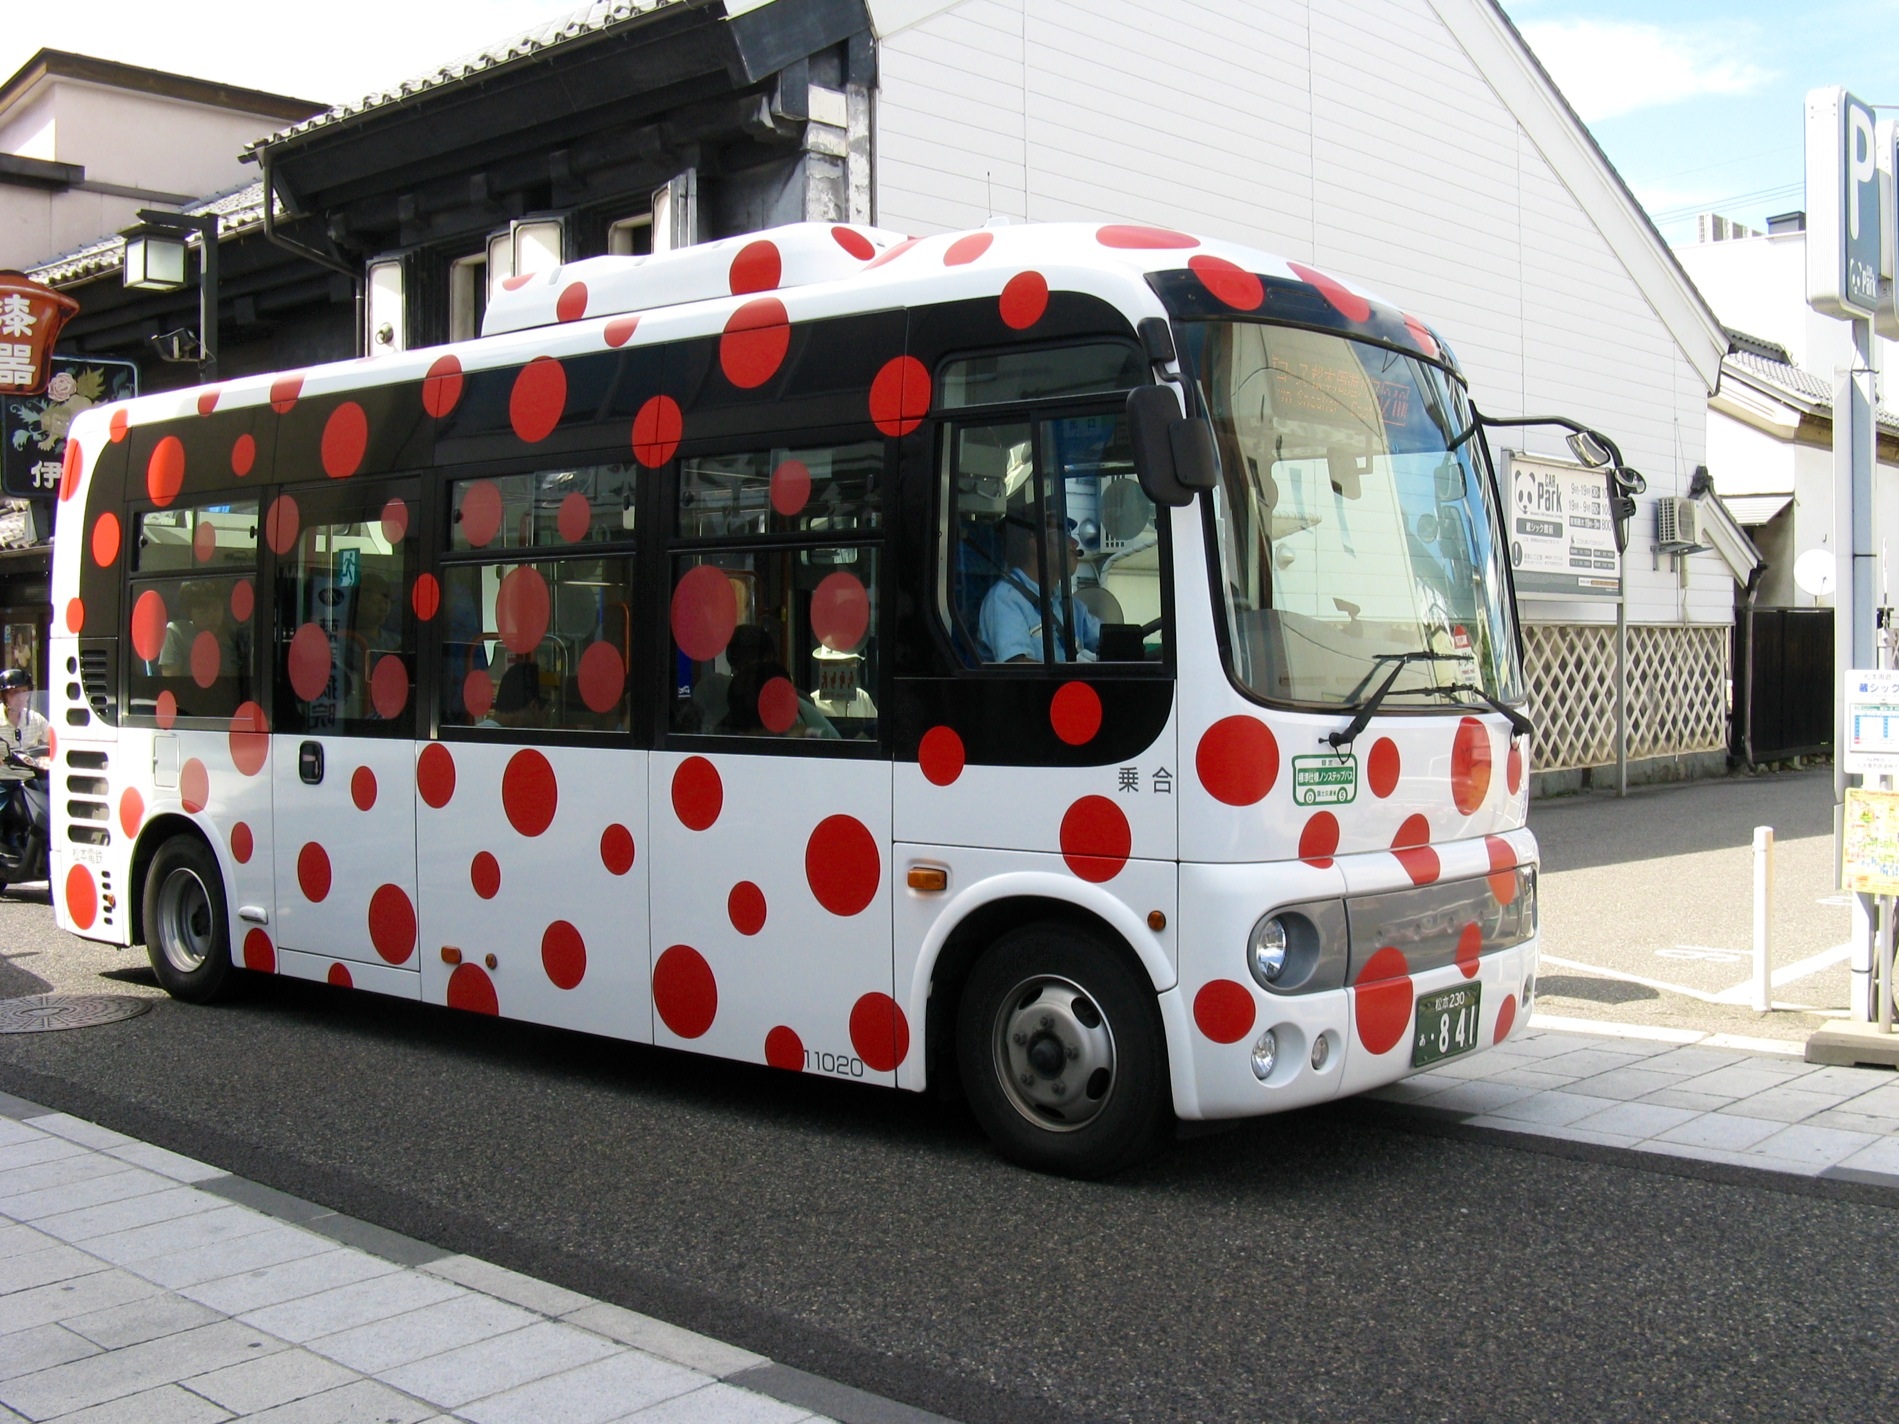  Yayoi Kusama bus